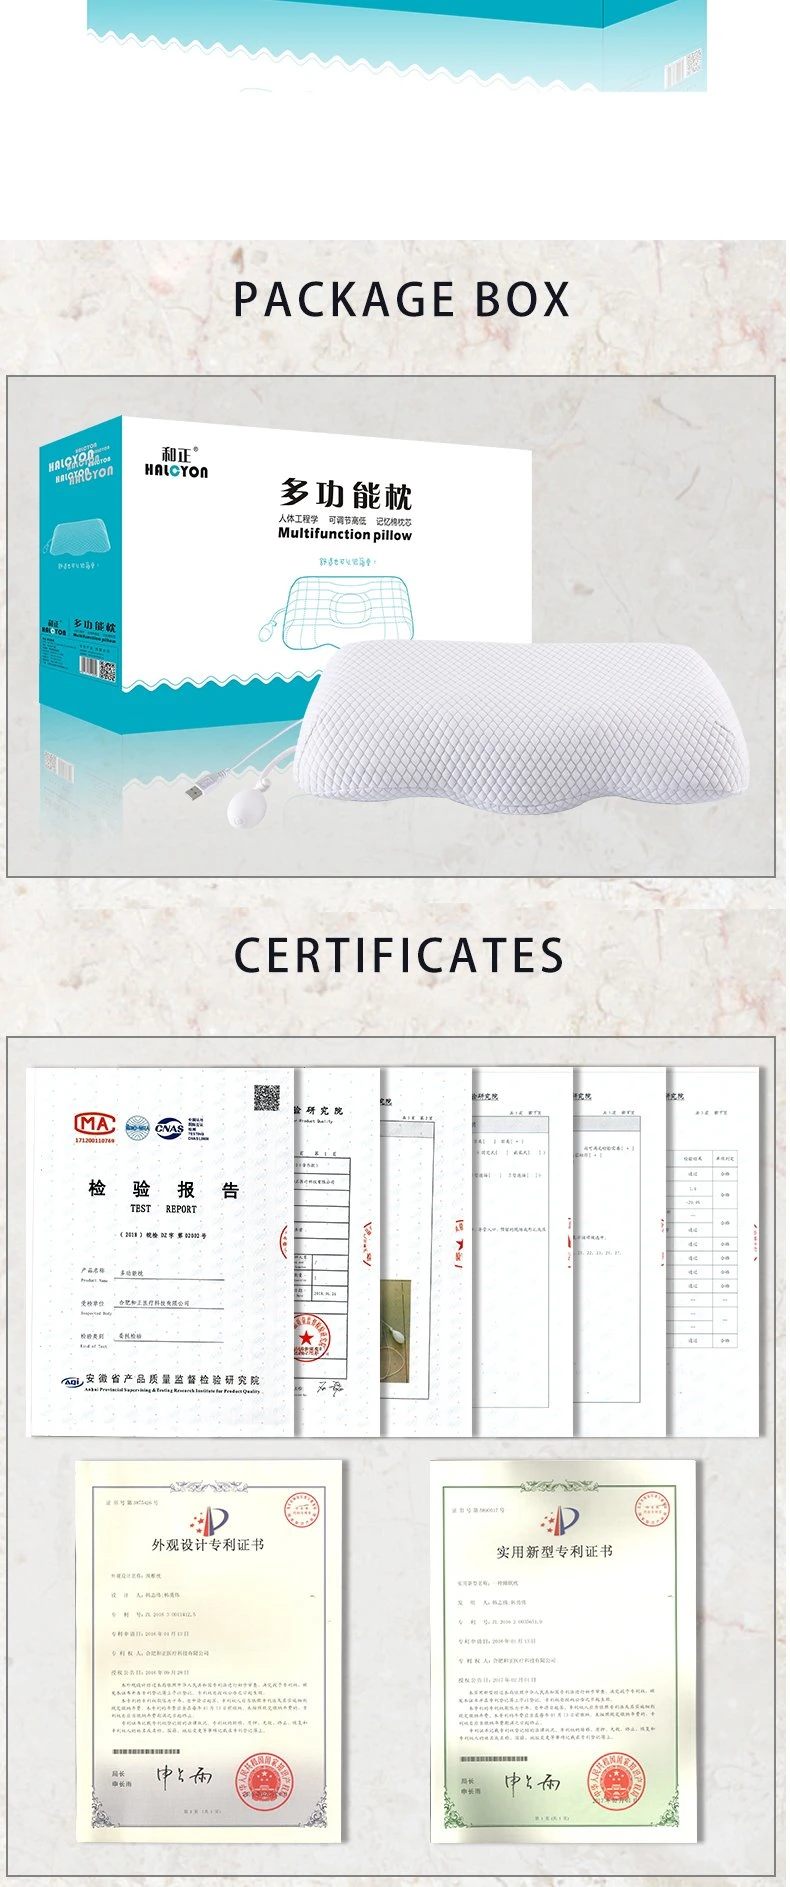 Home Electric Massage Pillow Neck Memory Foam Sleeping Pillow with Heat Adjustable Pillow